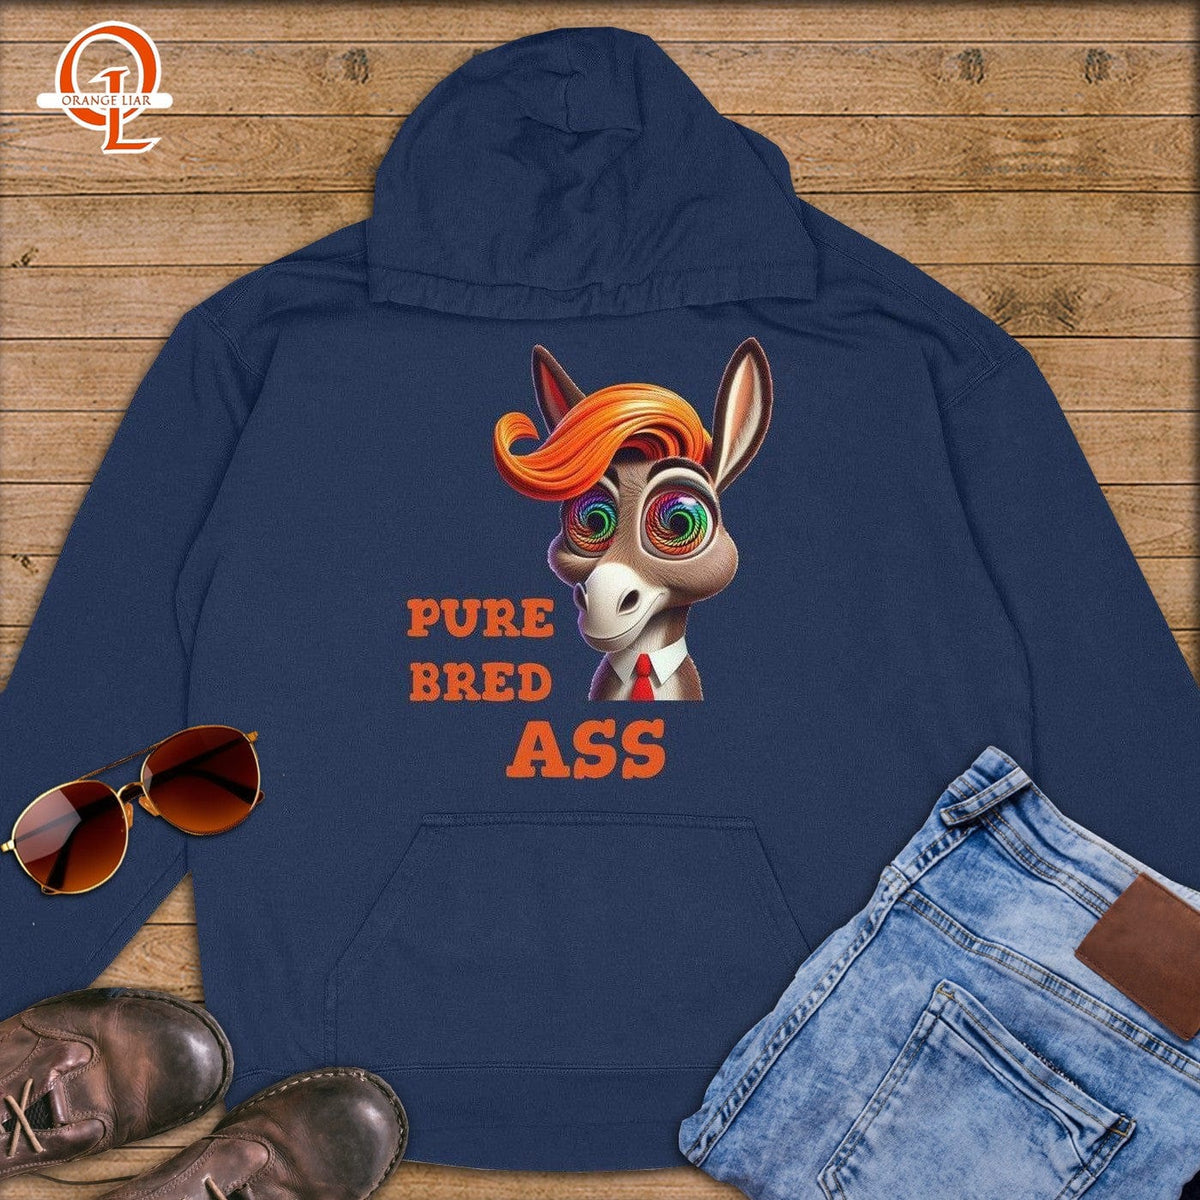 Pure Bred Ass ~ Premium Hoodie-Orange Liar